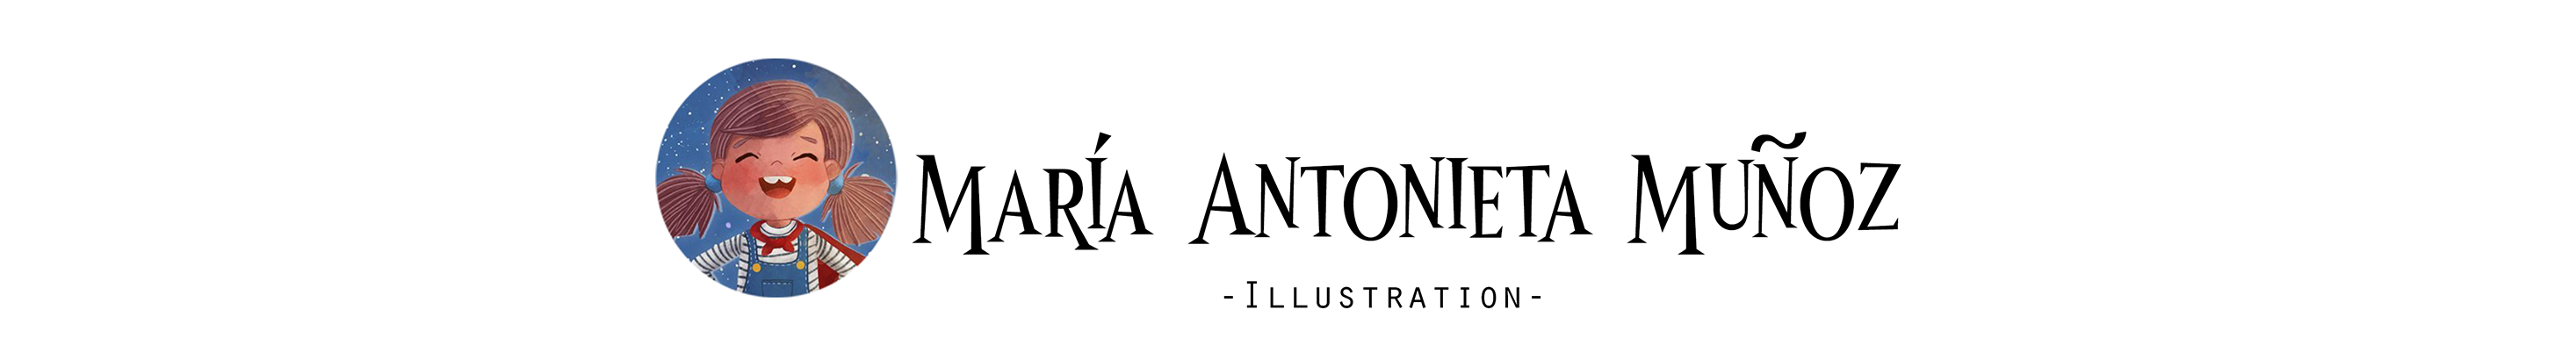 Profil-Banner von María Antonieta Muñoz